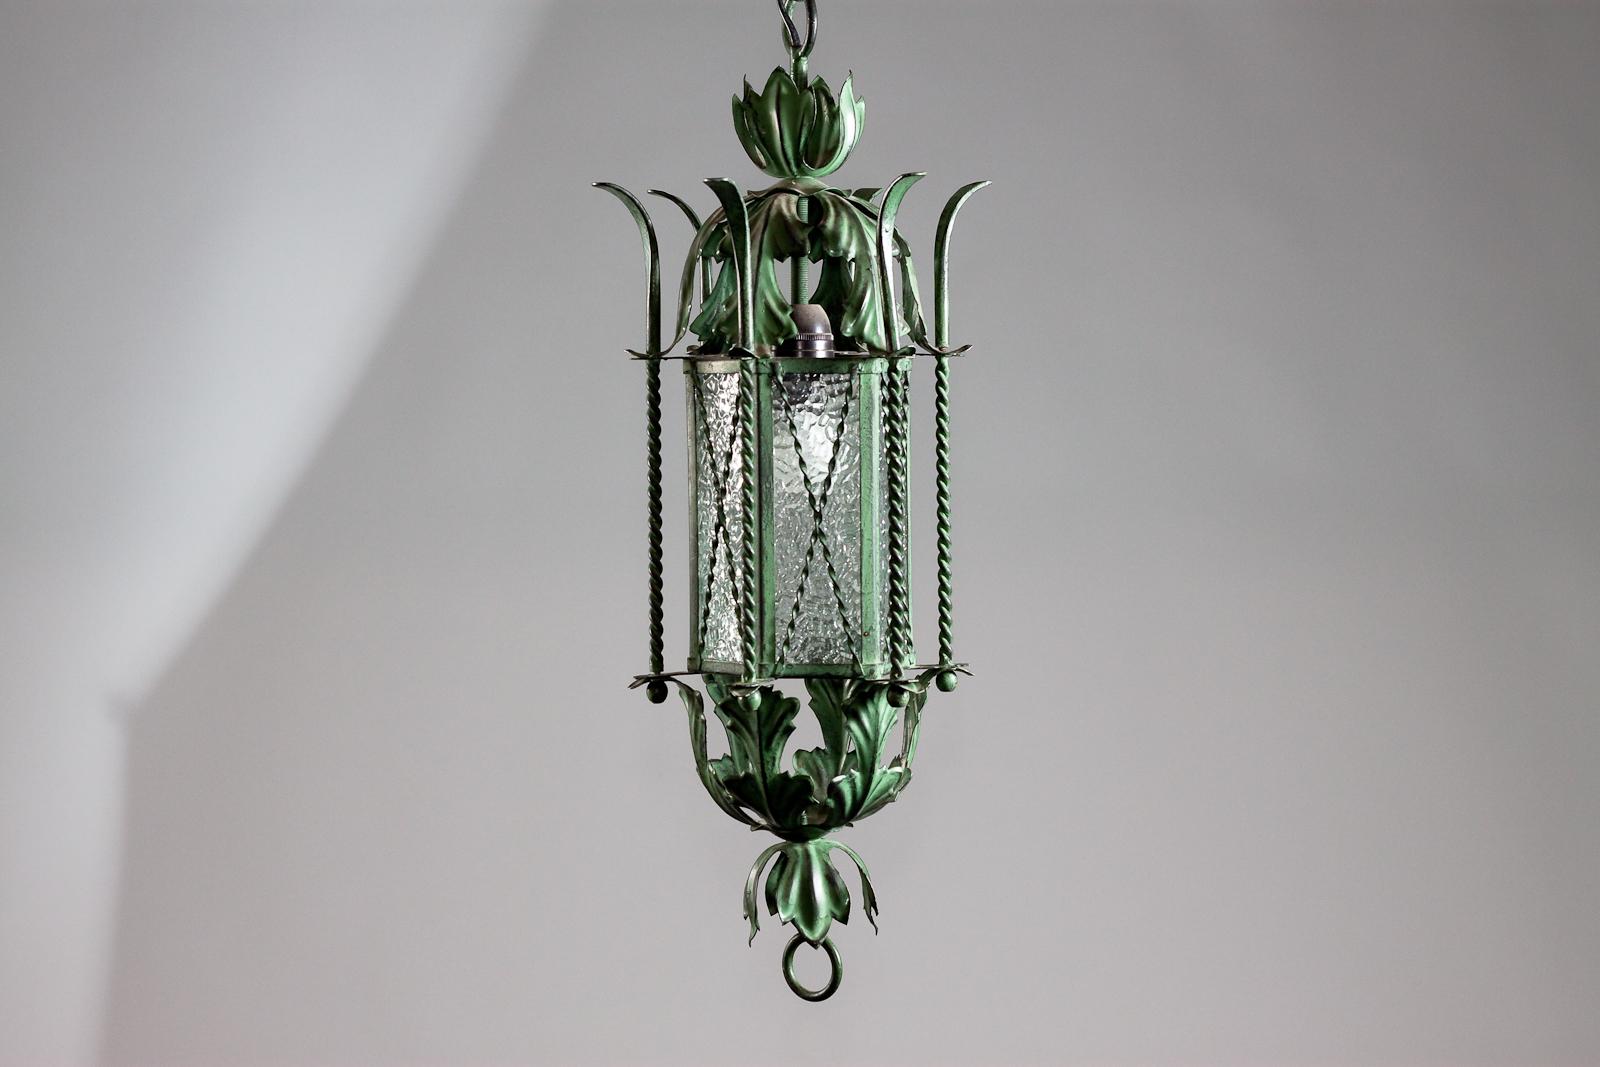 Glass 1930's Finnish wrought iron lantern light